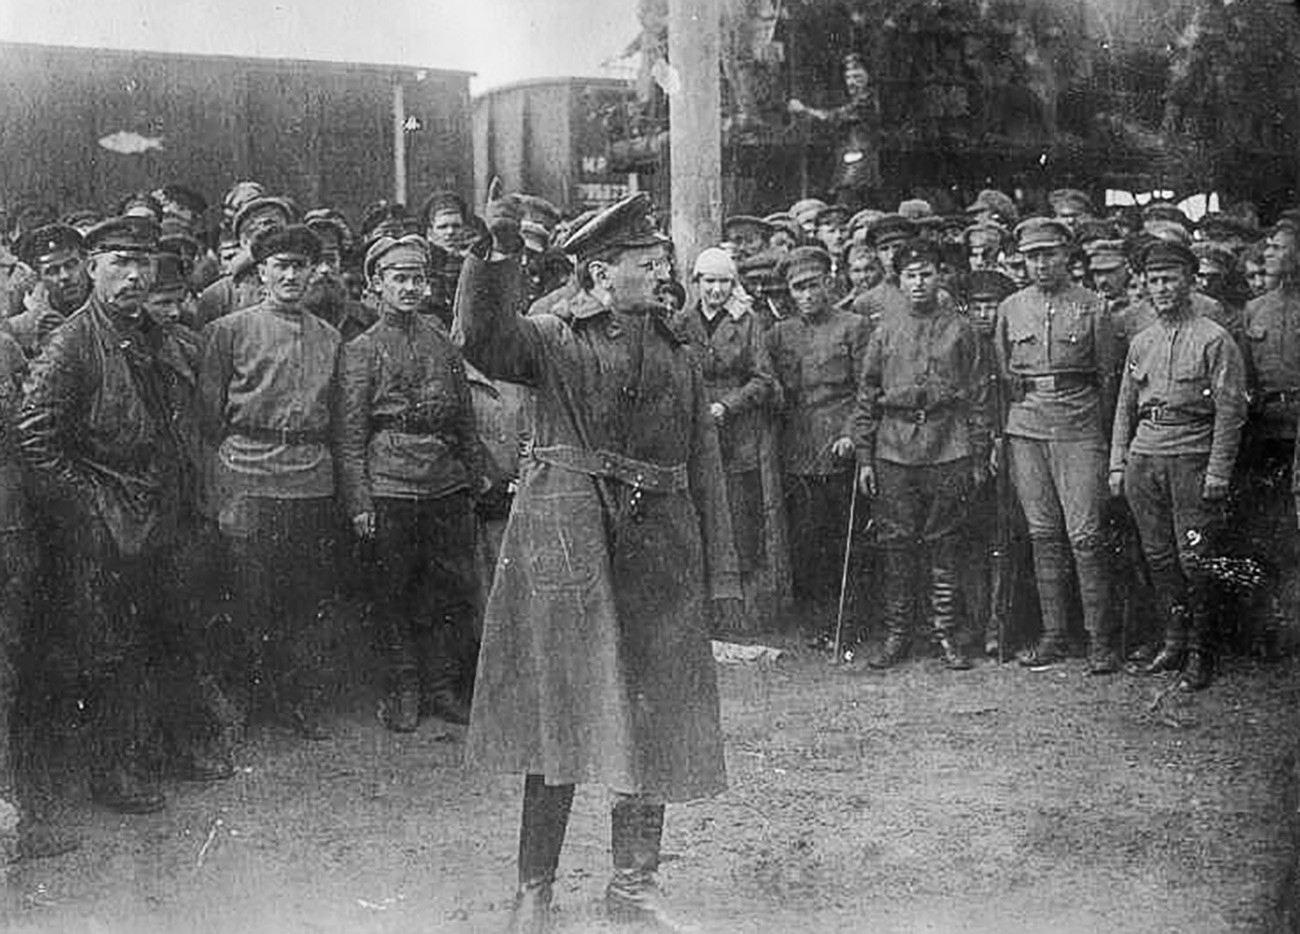 Lav Trocki drži govor vojnicima.

